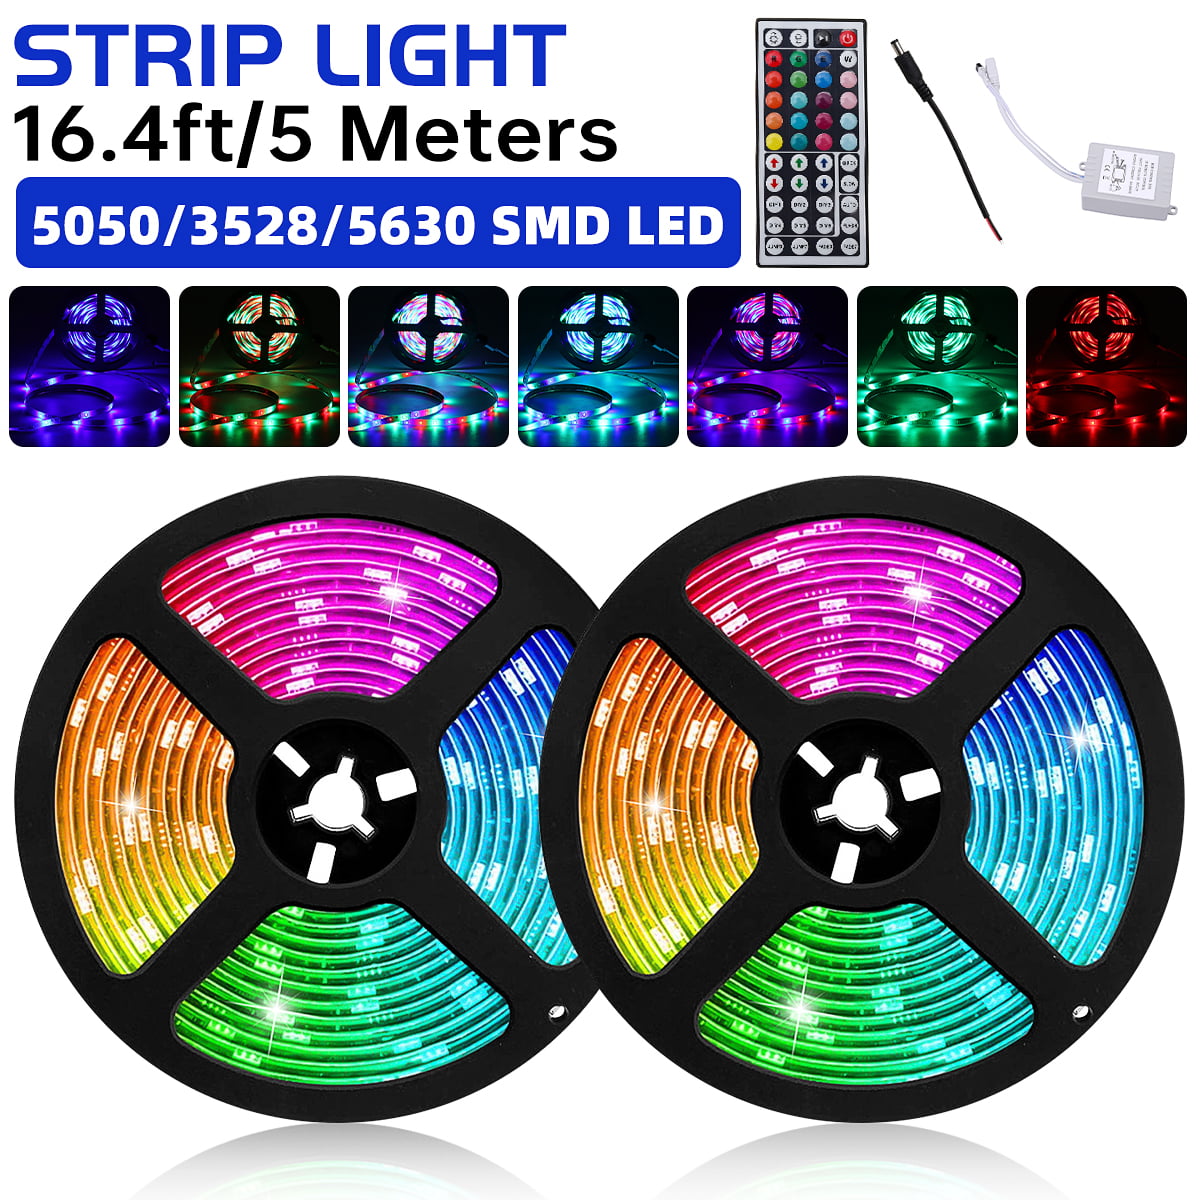 1-10m set SMD LED strip waterproof/Non 5630 5050 3528 SMD Flexible Strip Light 